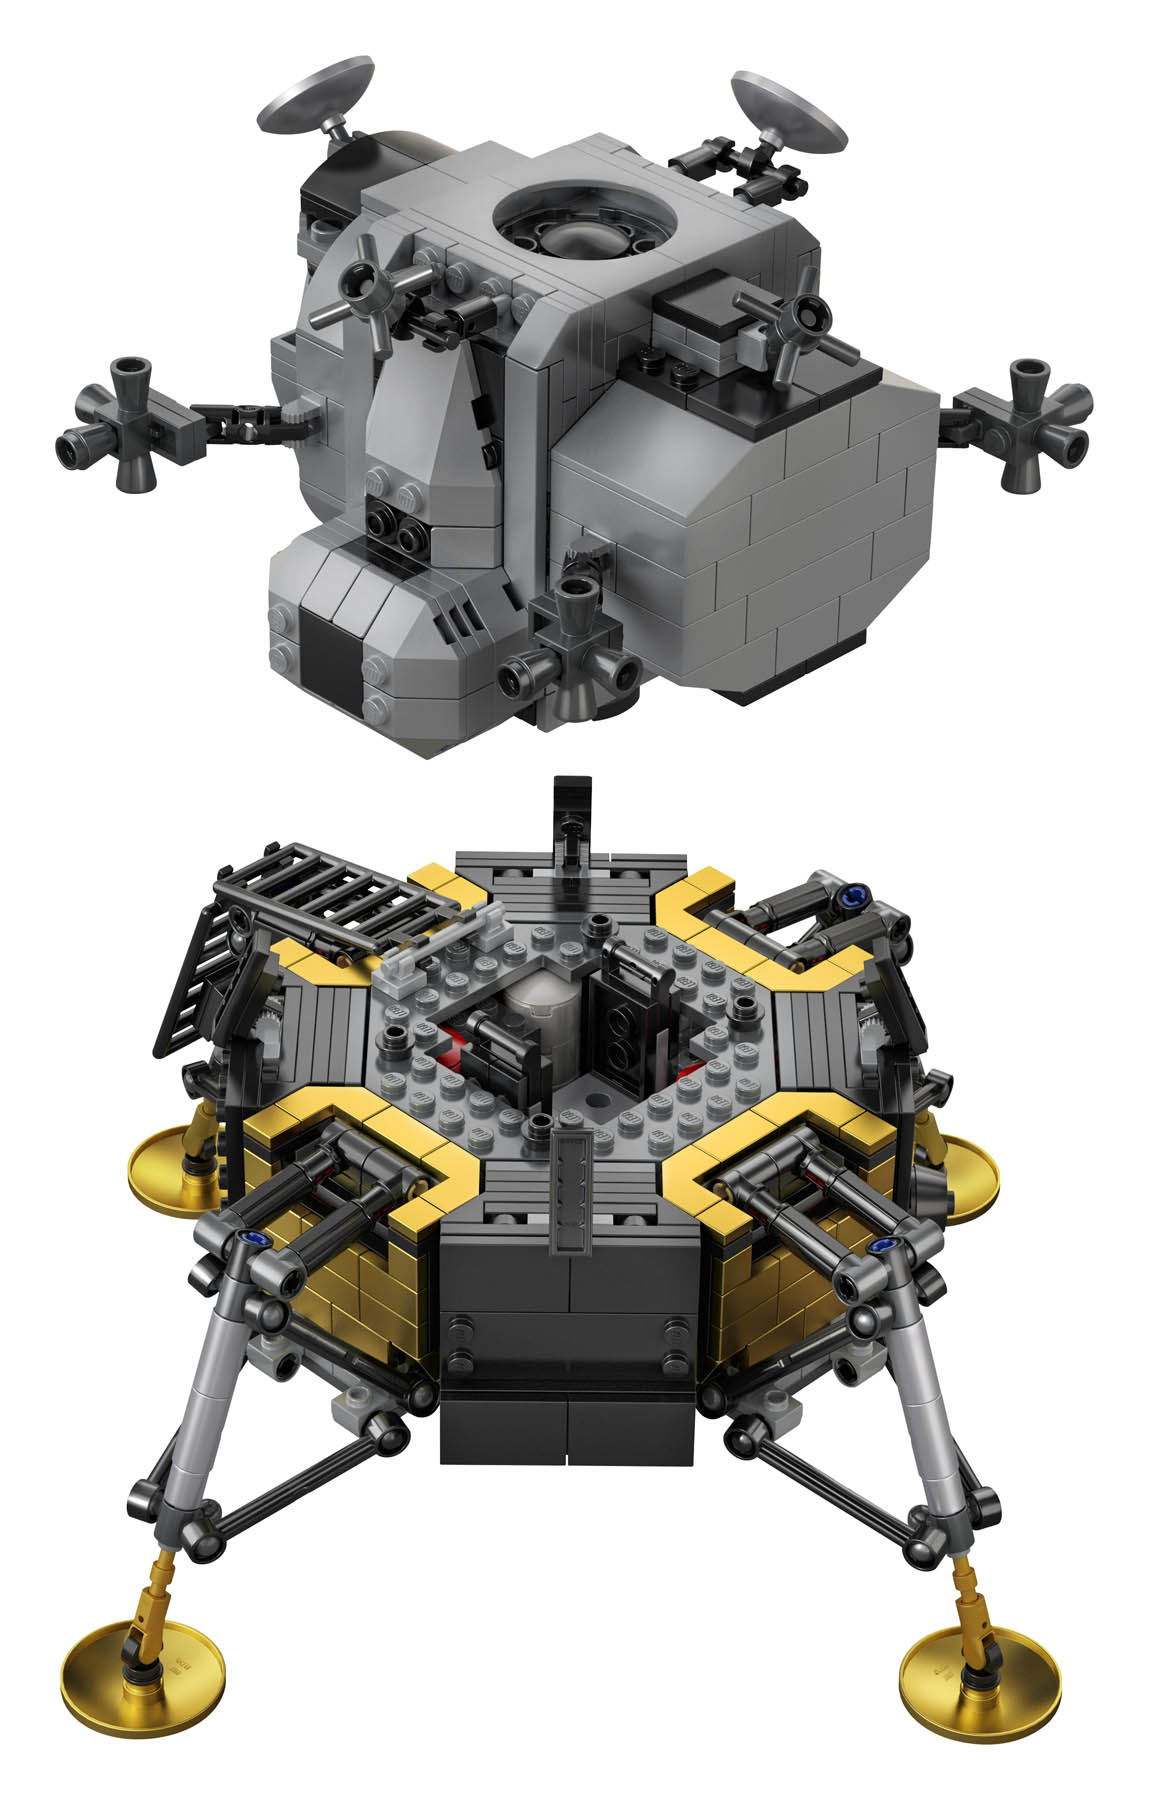 New LEGO NASA Apollo 11 Lunar Lander Set, Plus CITY Collaboration Sets -  FBTB